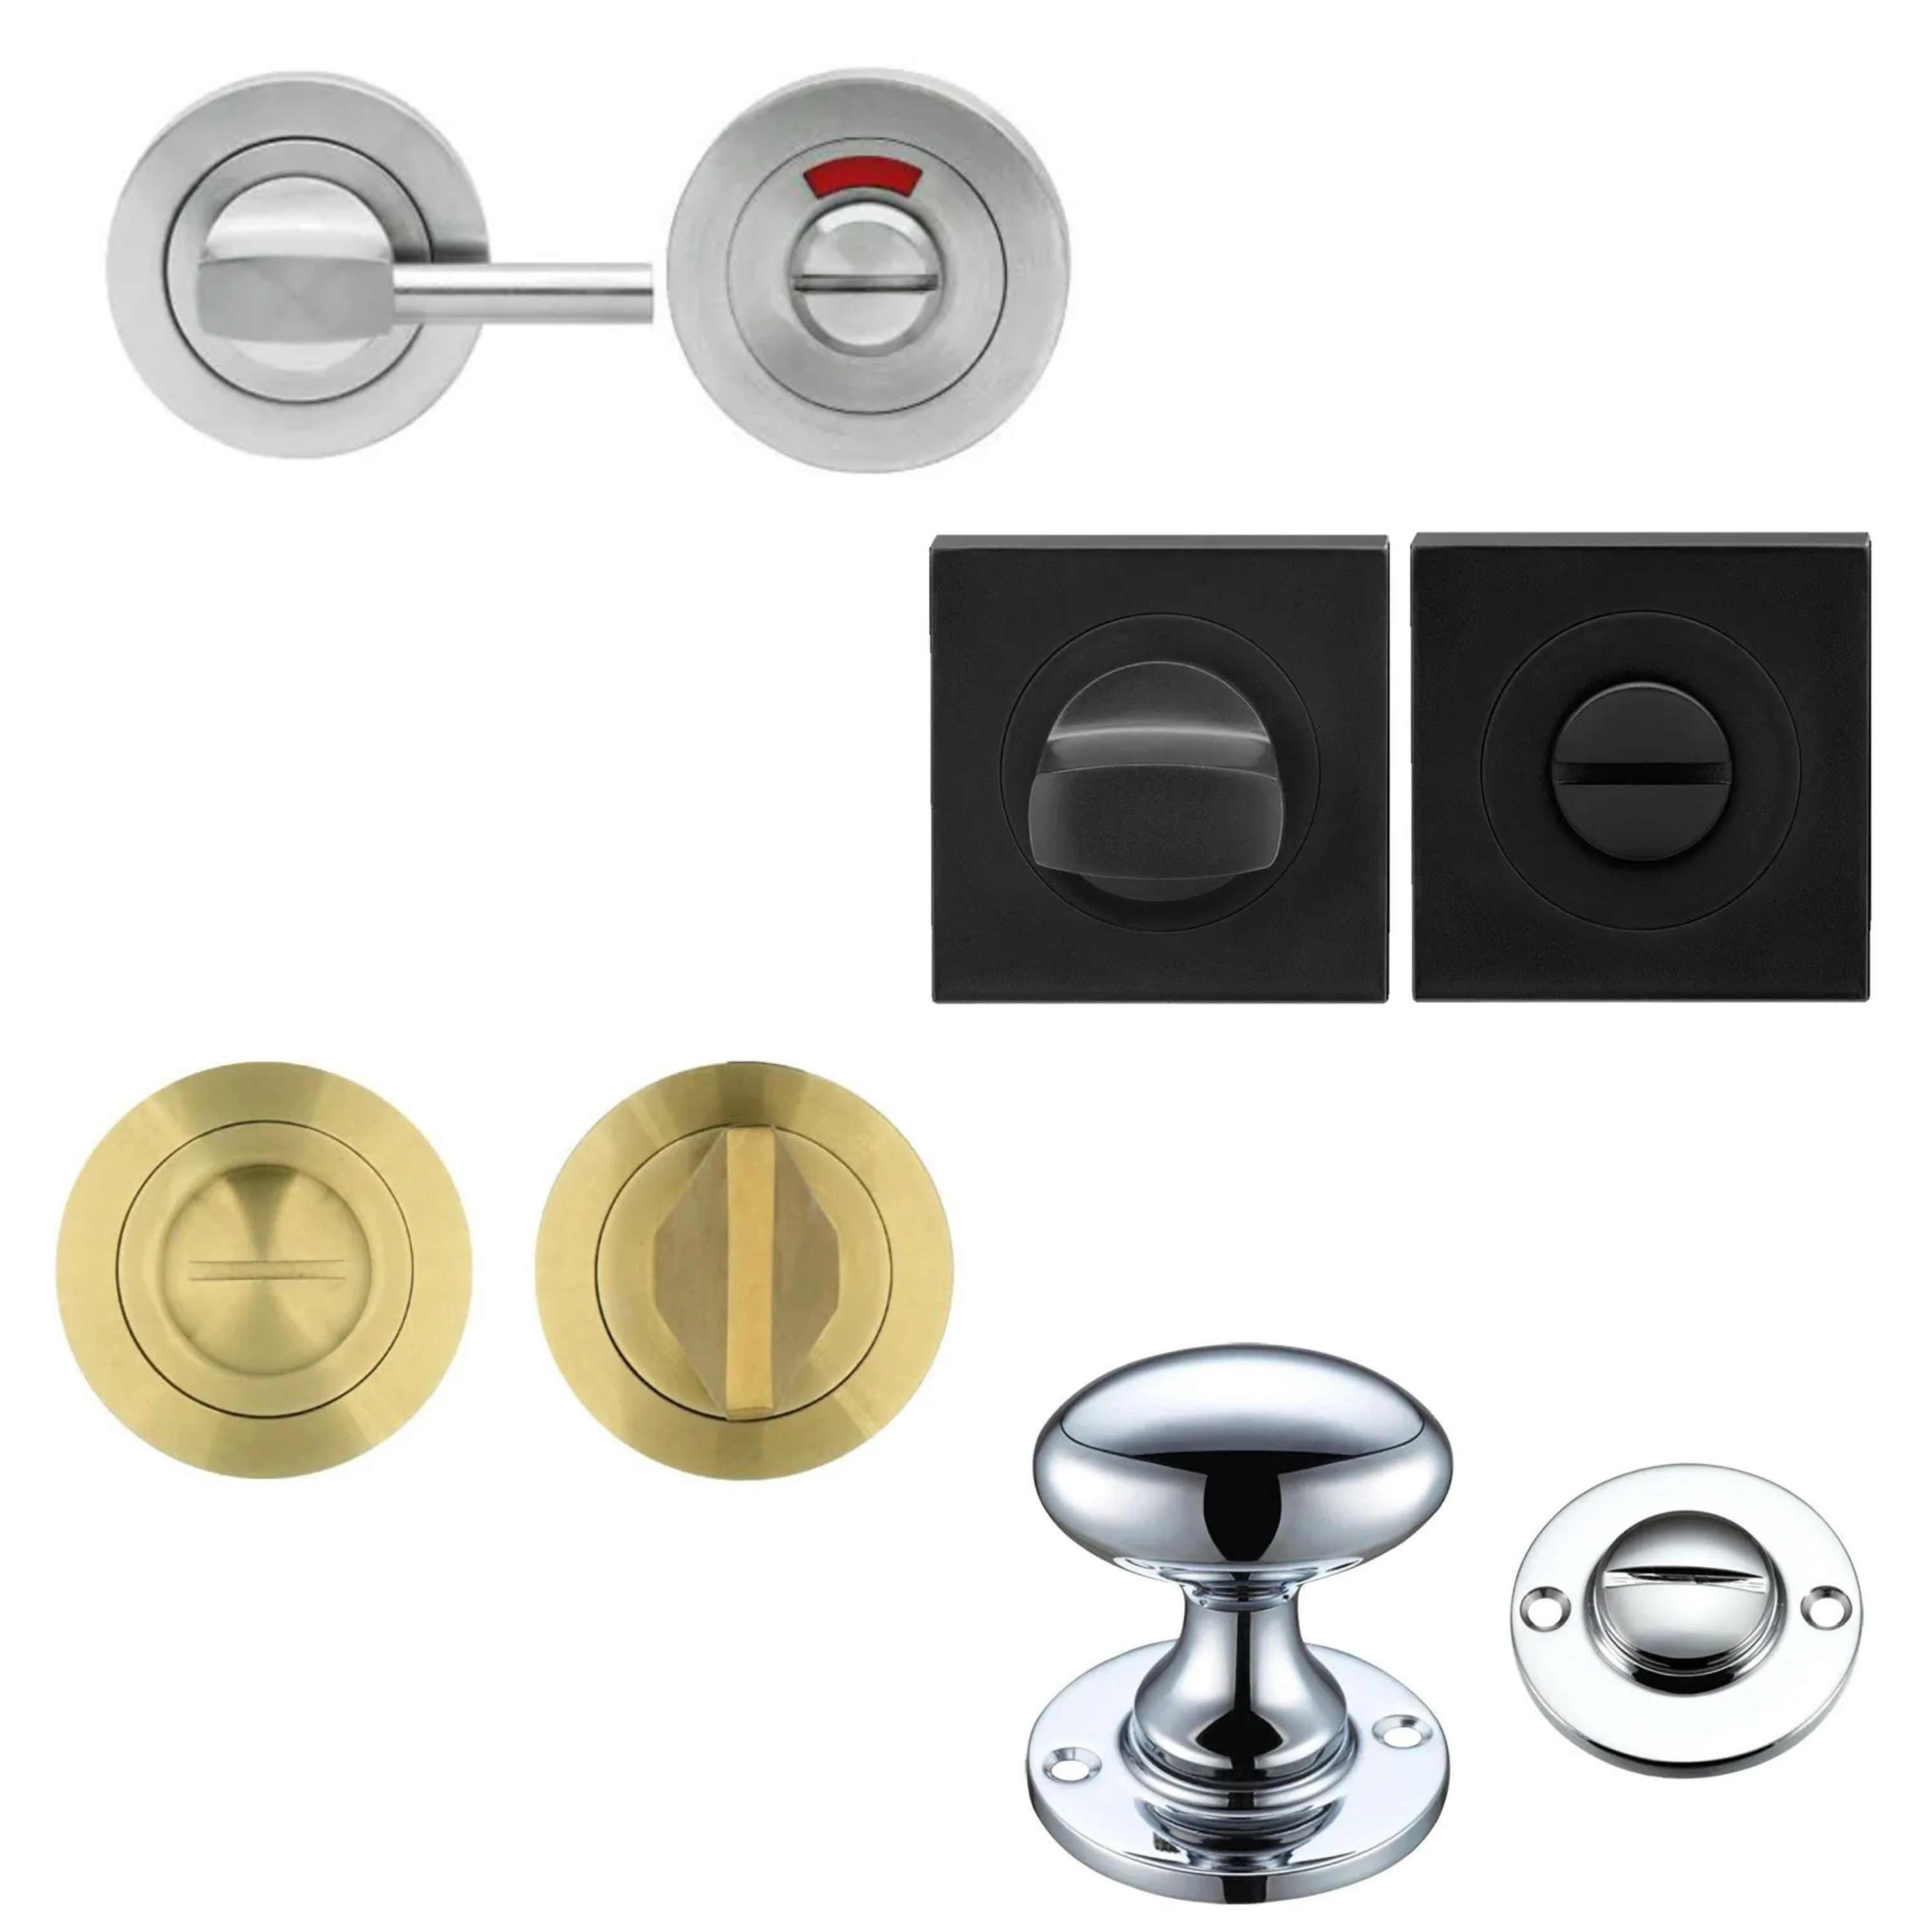 https://www.gjohns.co.uk/media/catalog/category/View-All-Bathroom-Turn-And-Release-Locks.jpg